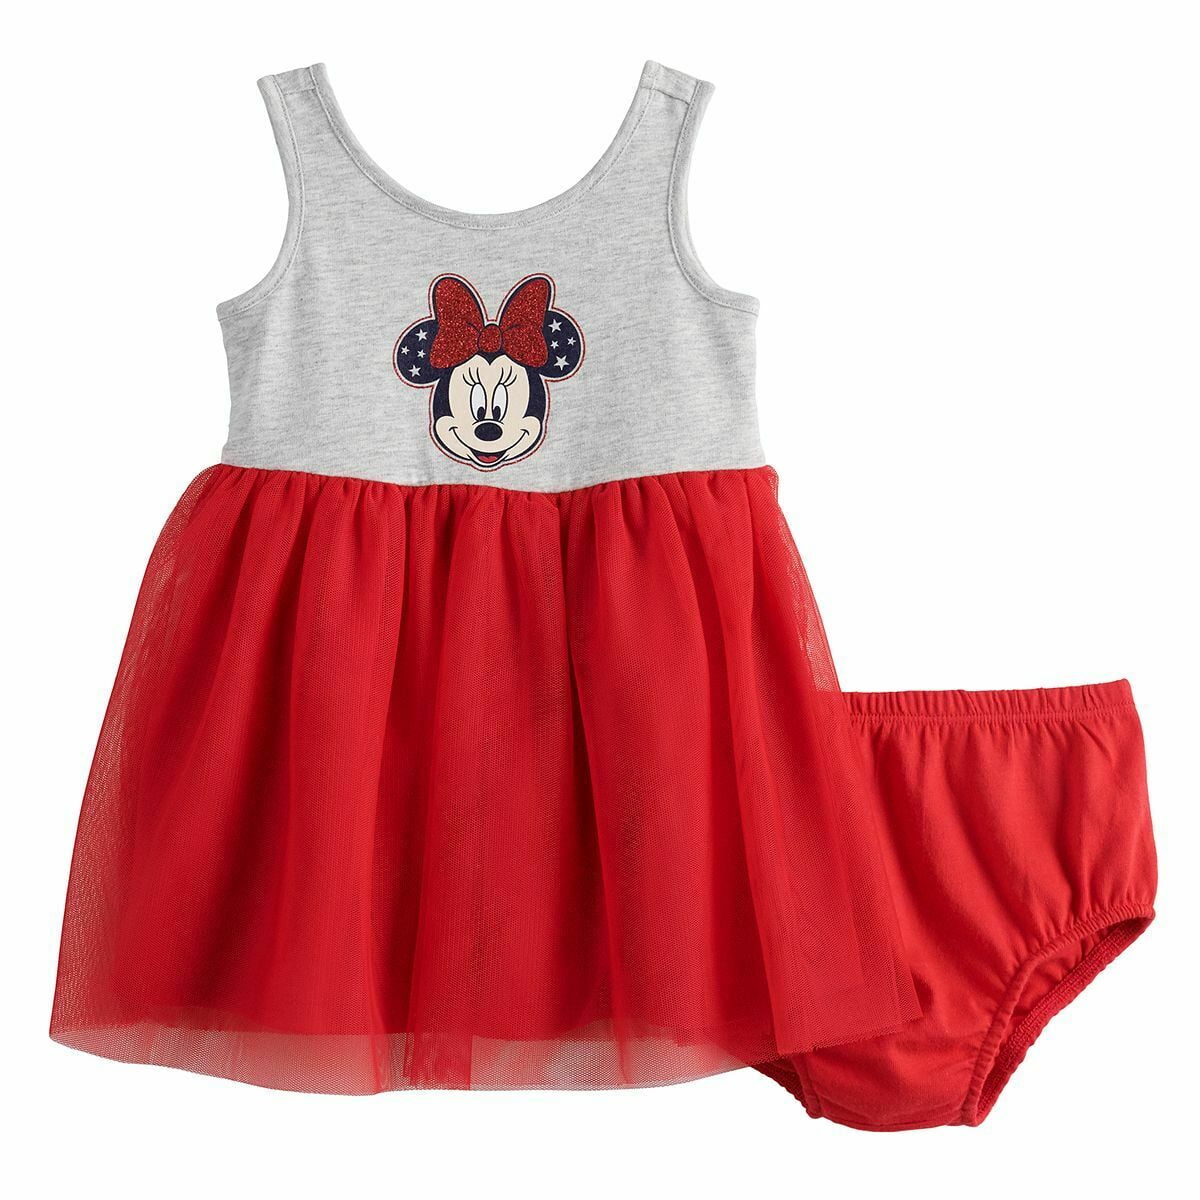 Disney Minnie Mouse Grey Dress Age 6/9 Months 